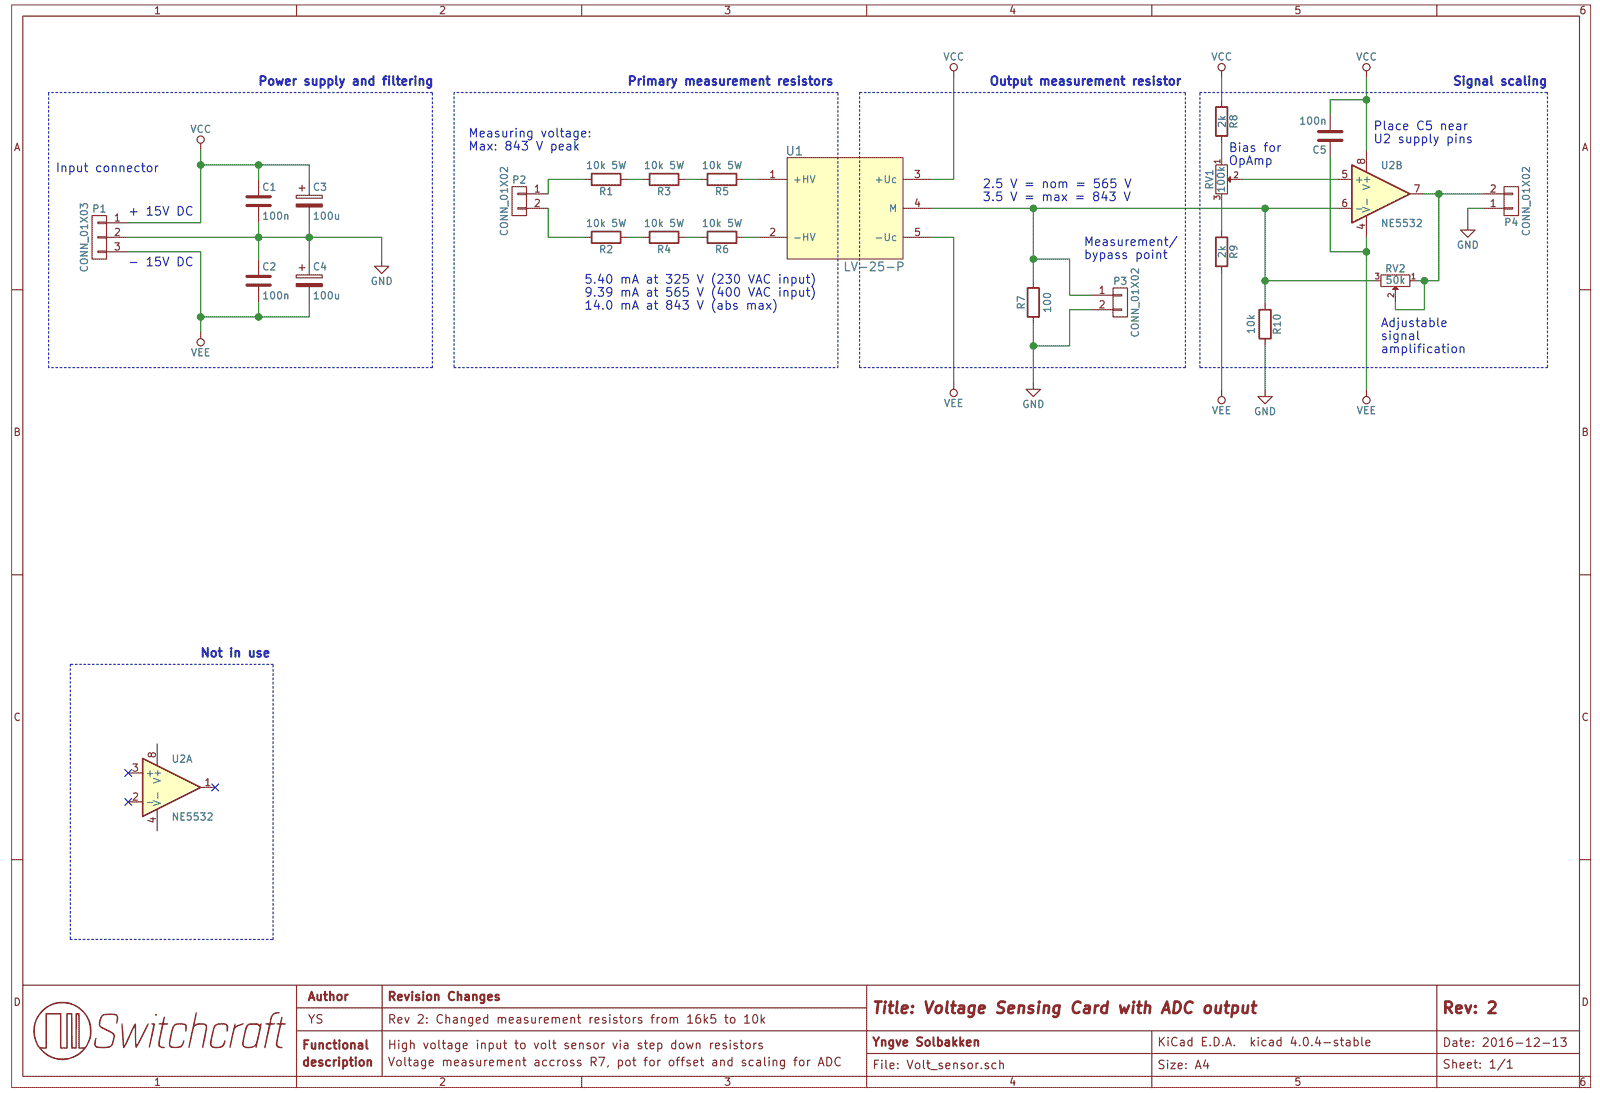 3: The LEM LV 25-P voltage transducer schematic.